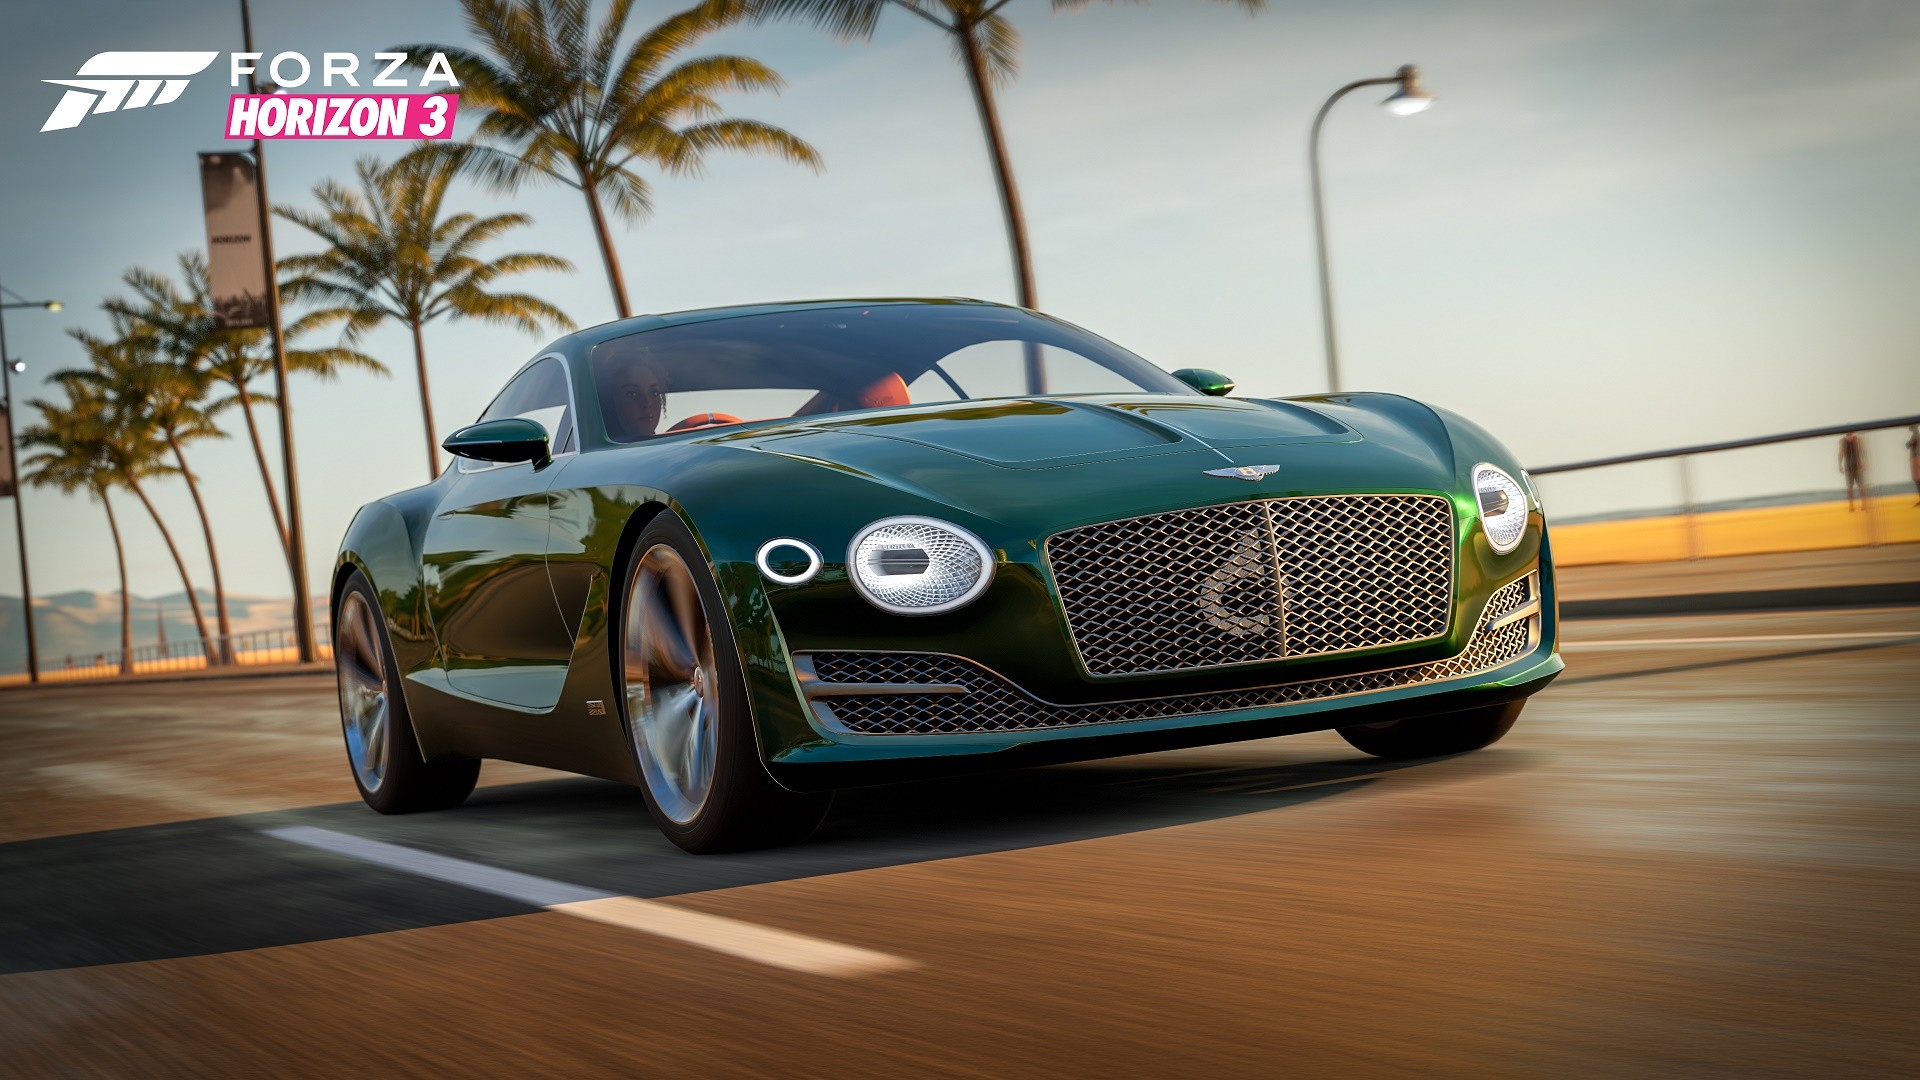 Pramod Ks Bentley Exp 10 Speed 6 Concept Forza Horizon 3